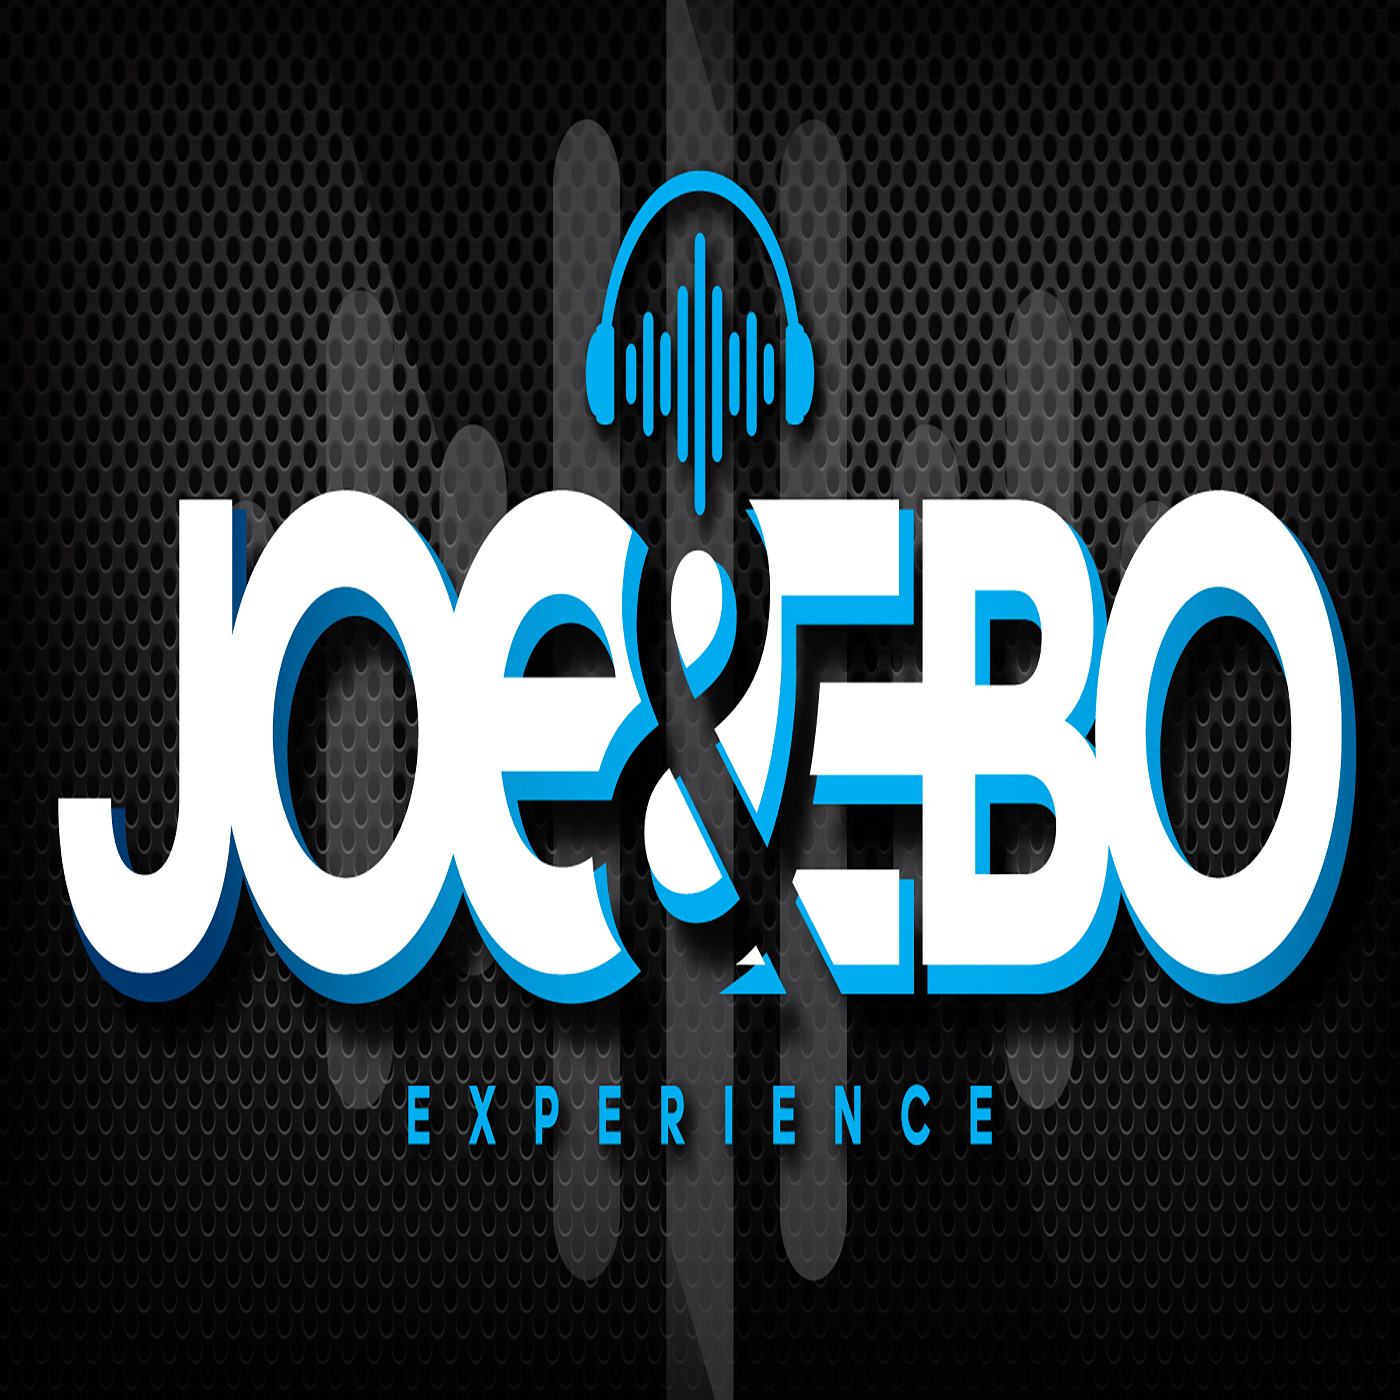 Joe & Ebo Experience: Testing 1, 2, 3